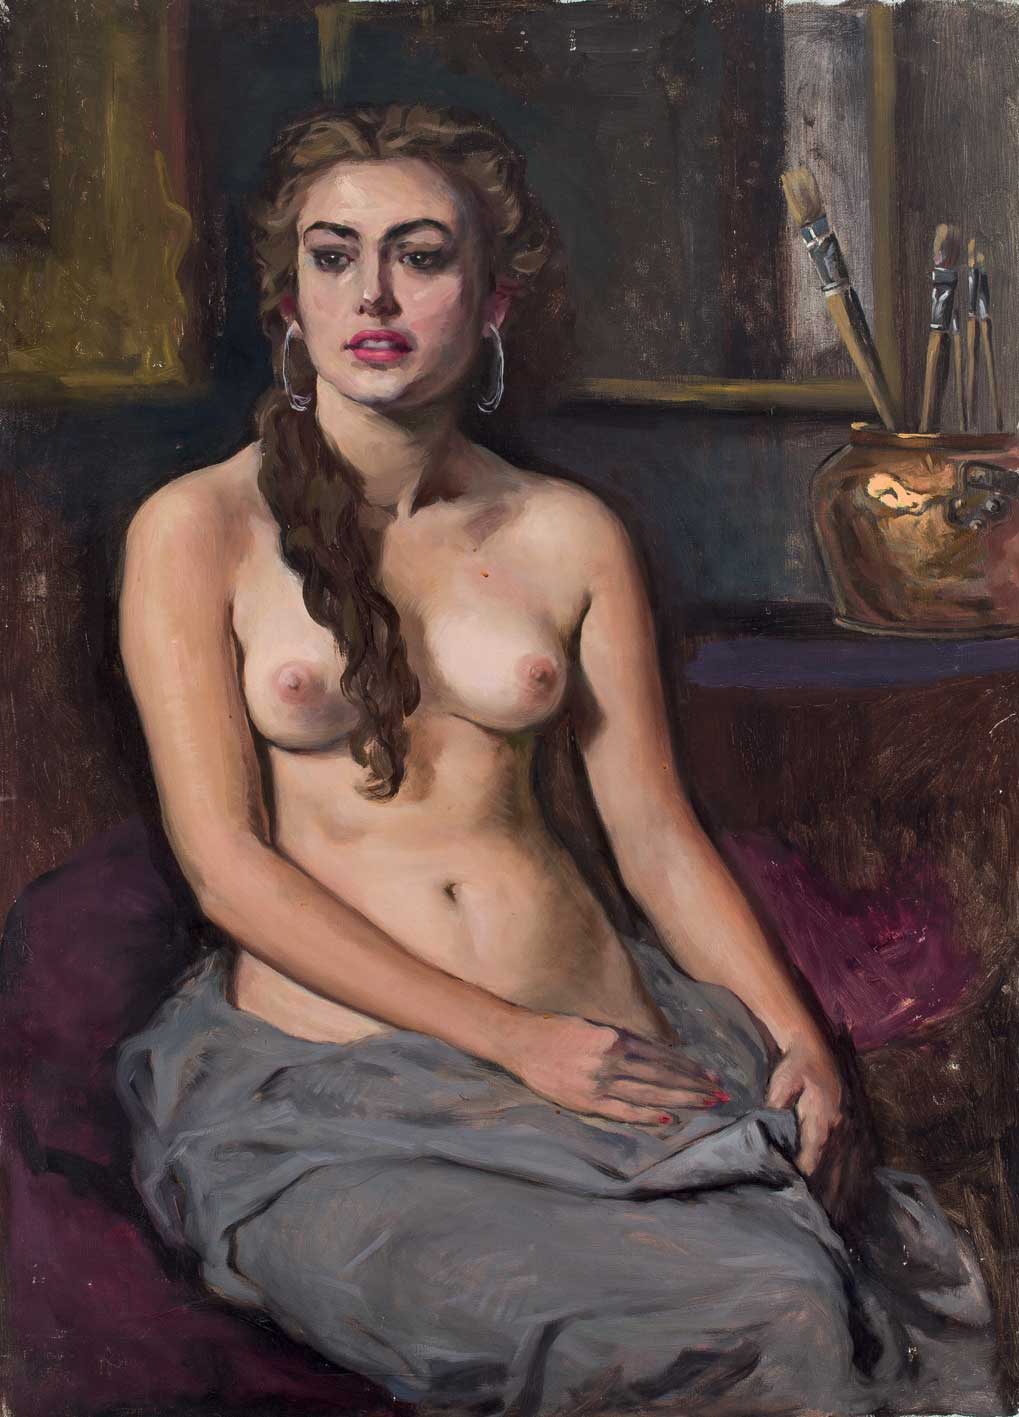 MONTERO MADRAZO, NAZARIO (1883 - 1963). "Desnudo femenino". Óleo sobre lienzo. 110 x 80.